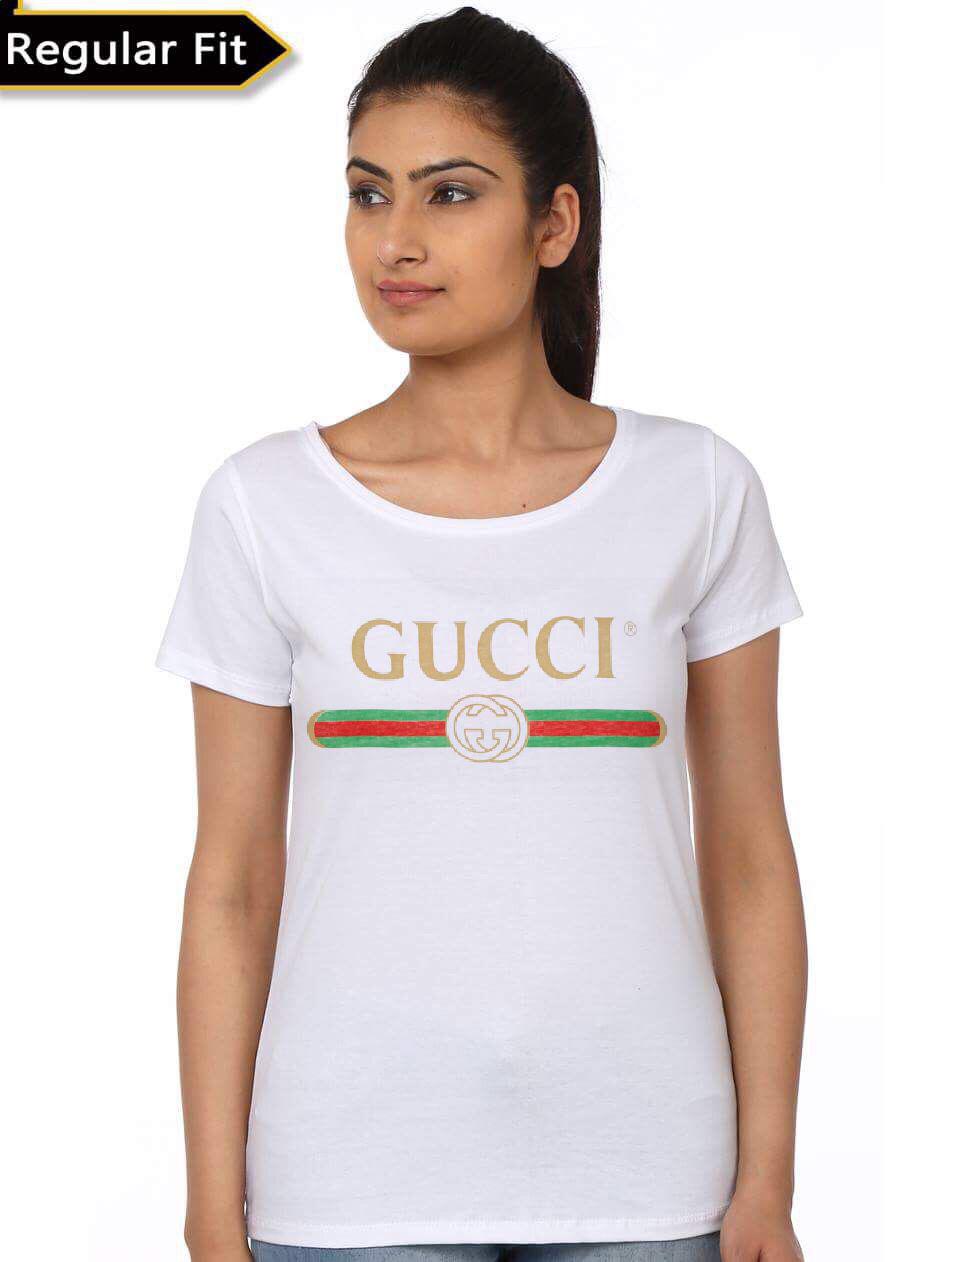 gucci tshirt for girls